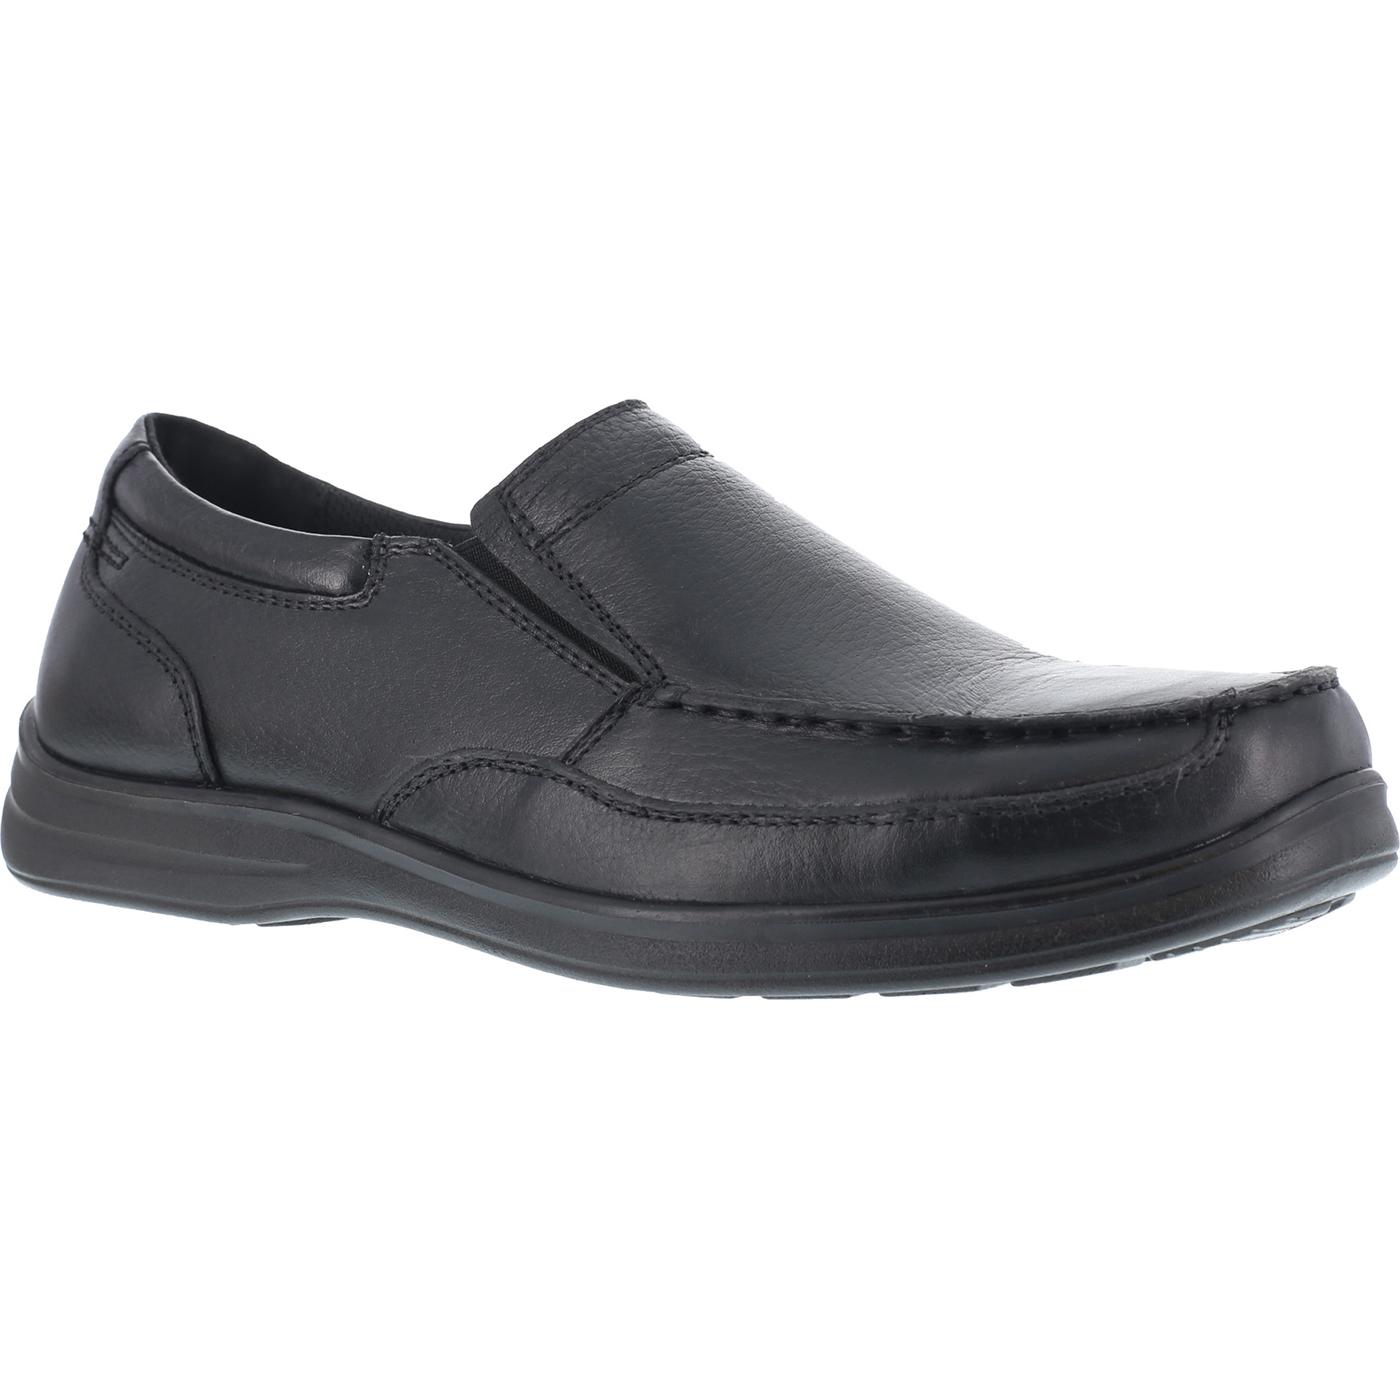 Moc Toe Slip-On Steel Toe SD Work Shoes, Florsheim Wily